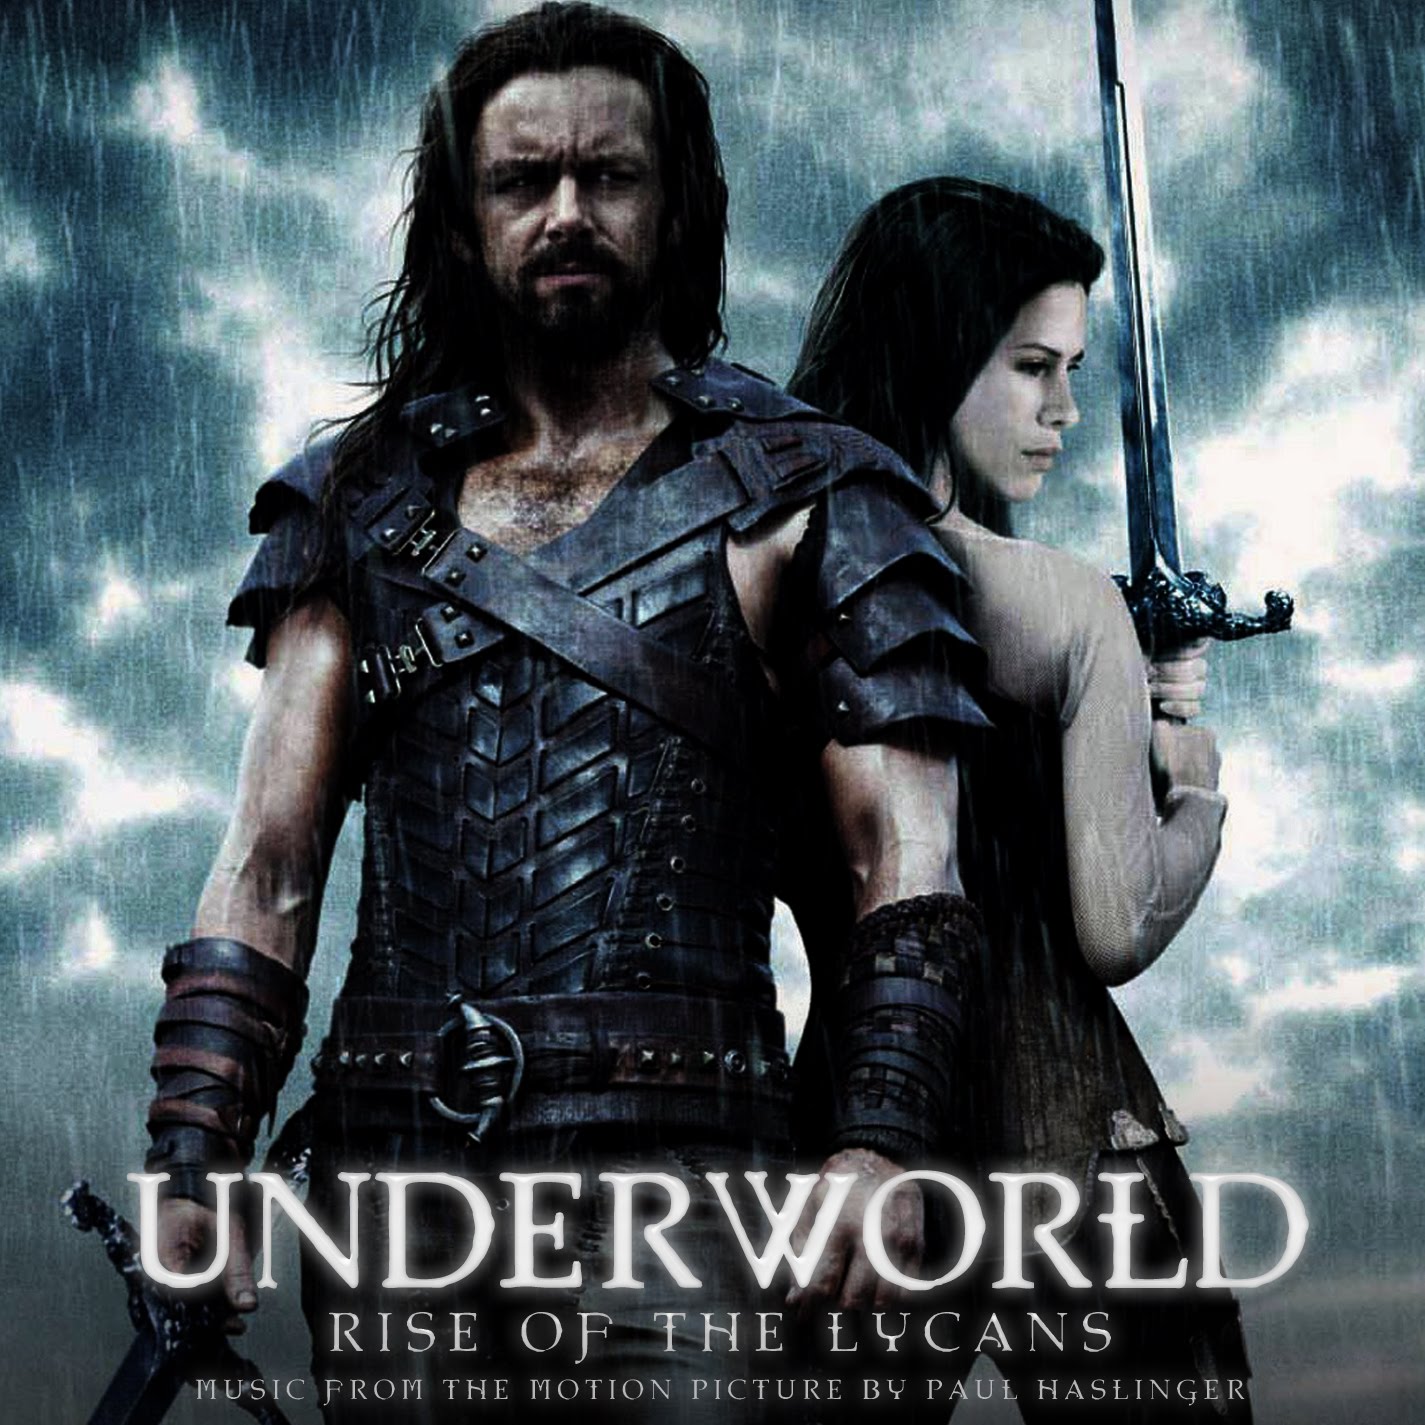 D - Underworld full movie free  in hd 1080p